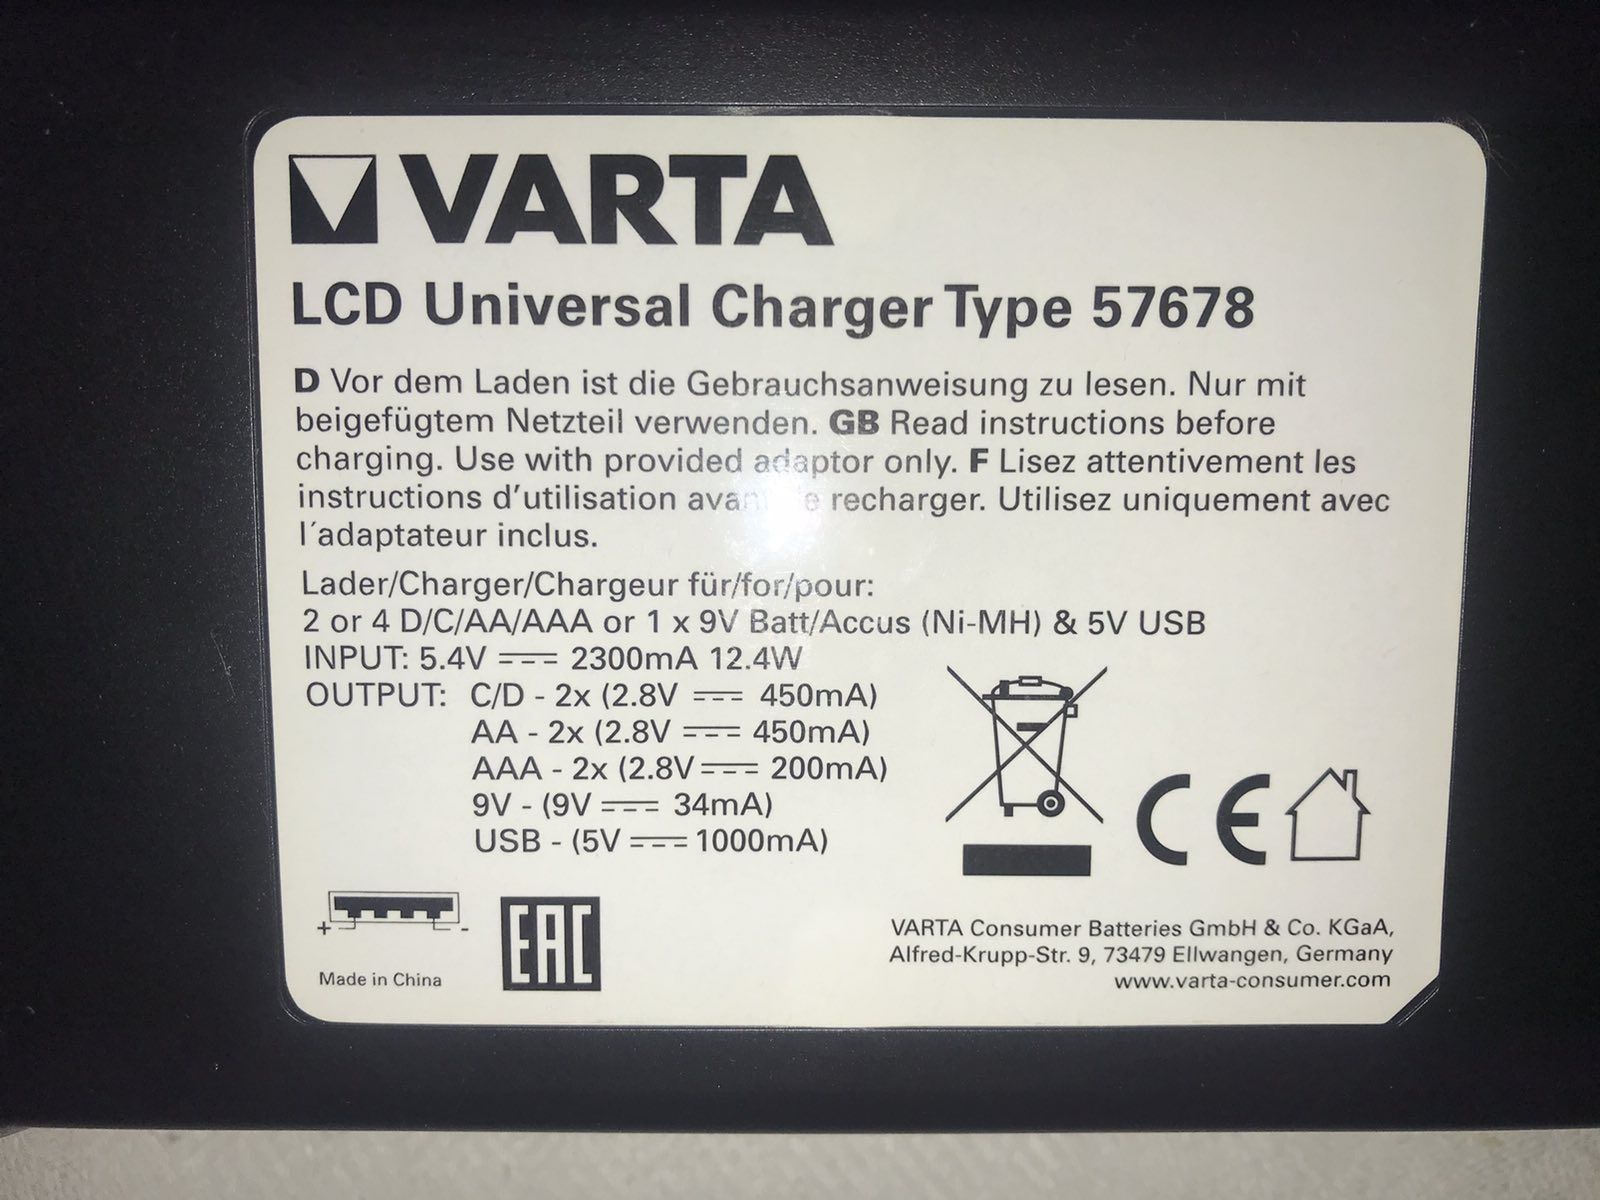 Varta lcd universal charger type 57678 зарядное устройство